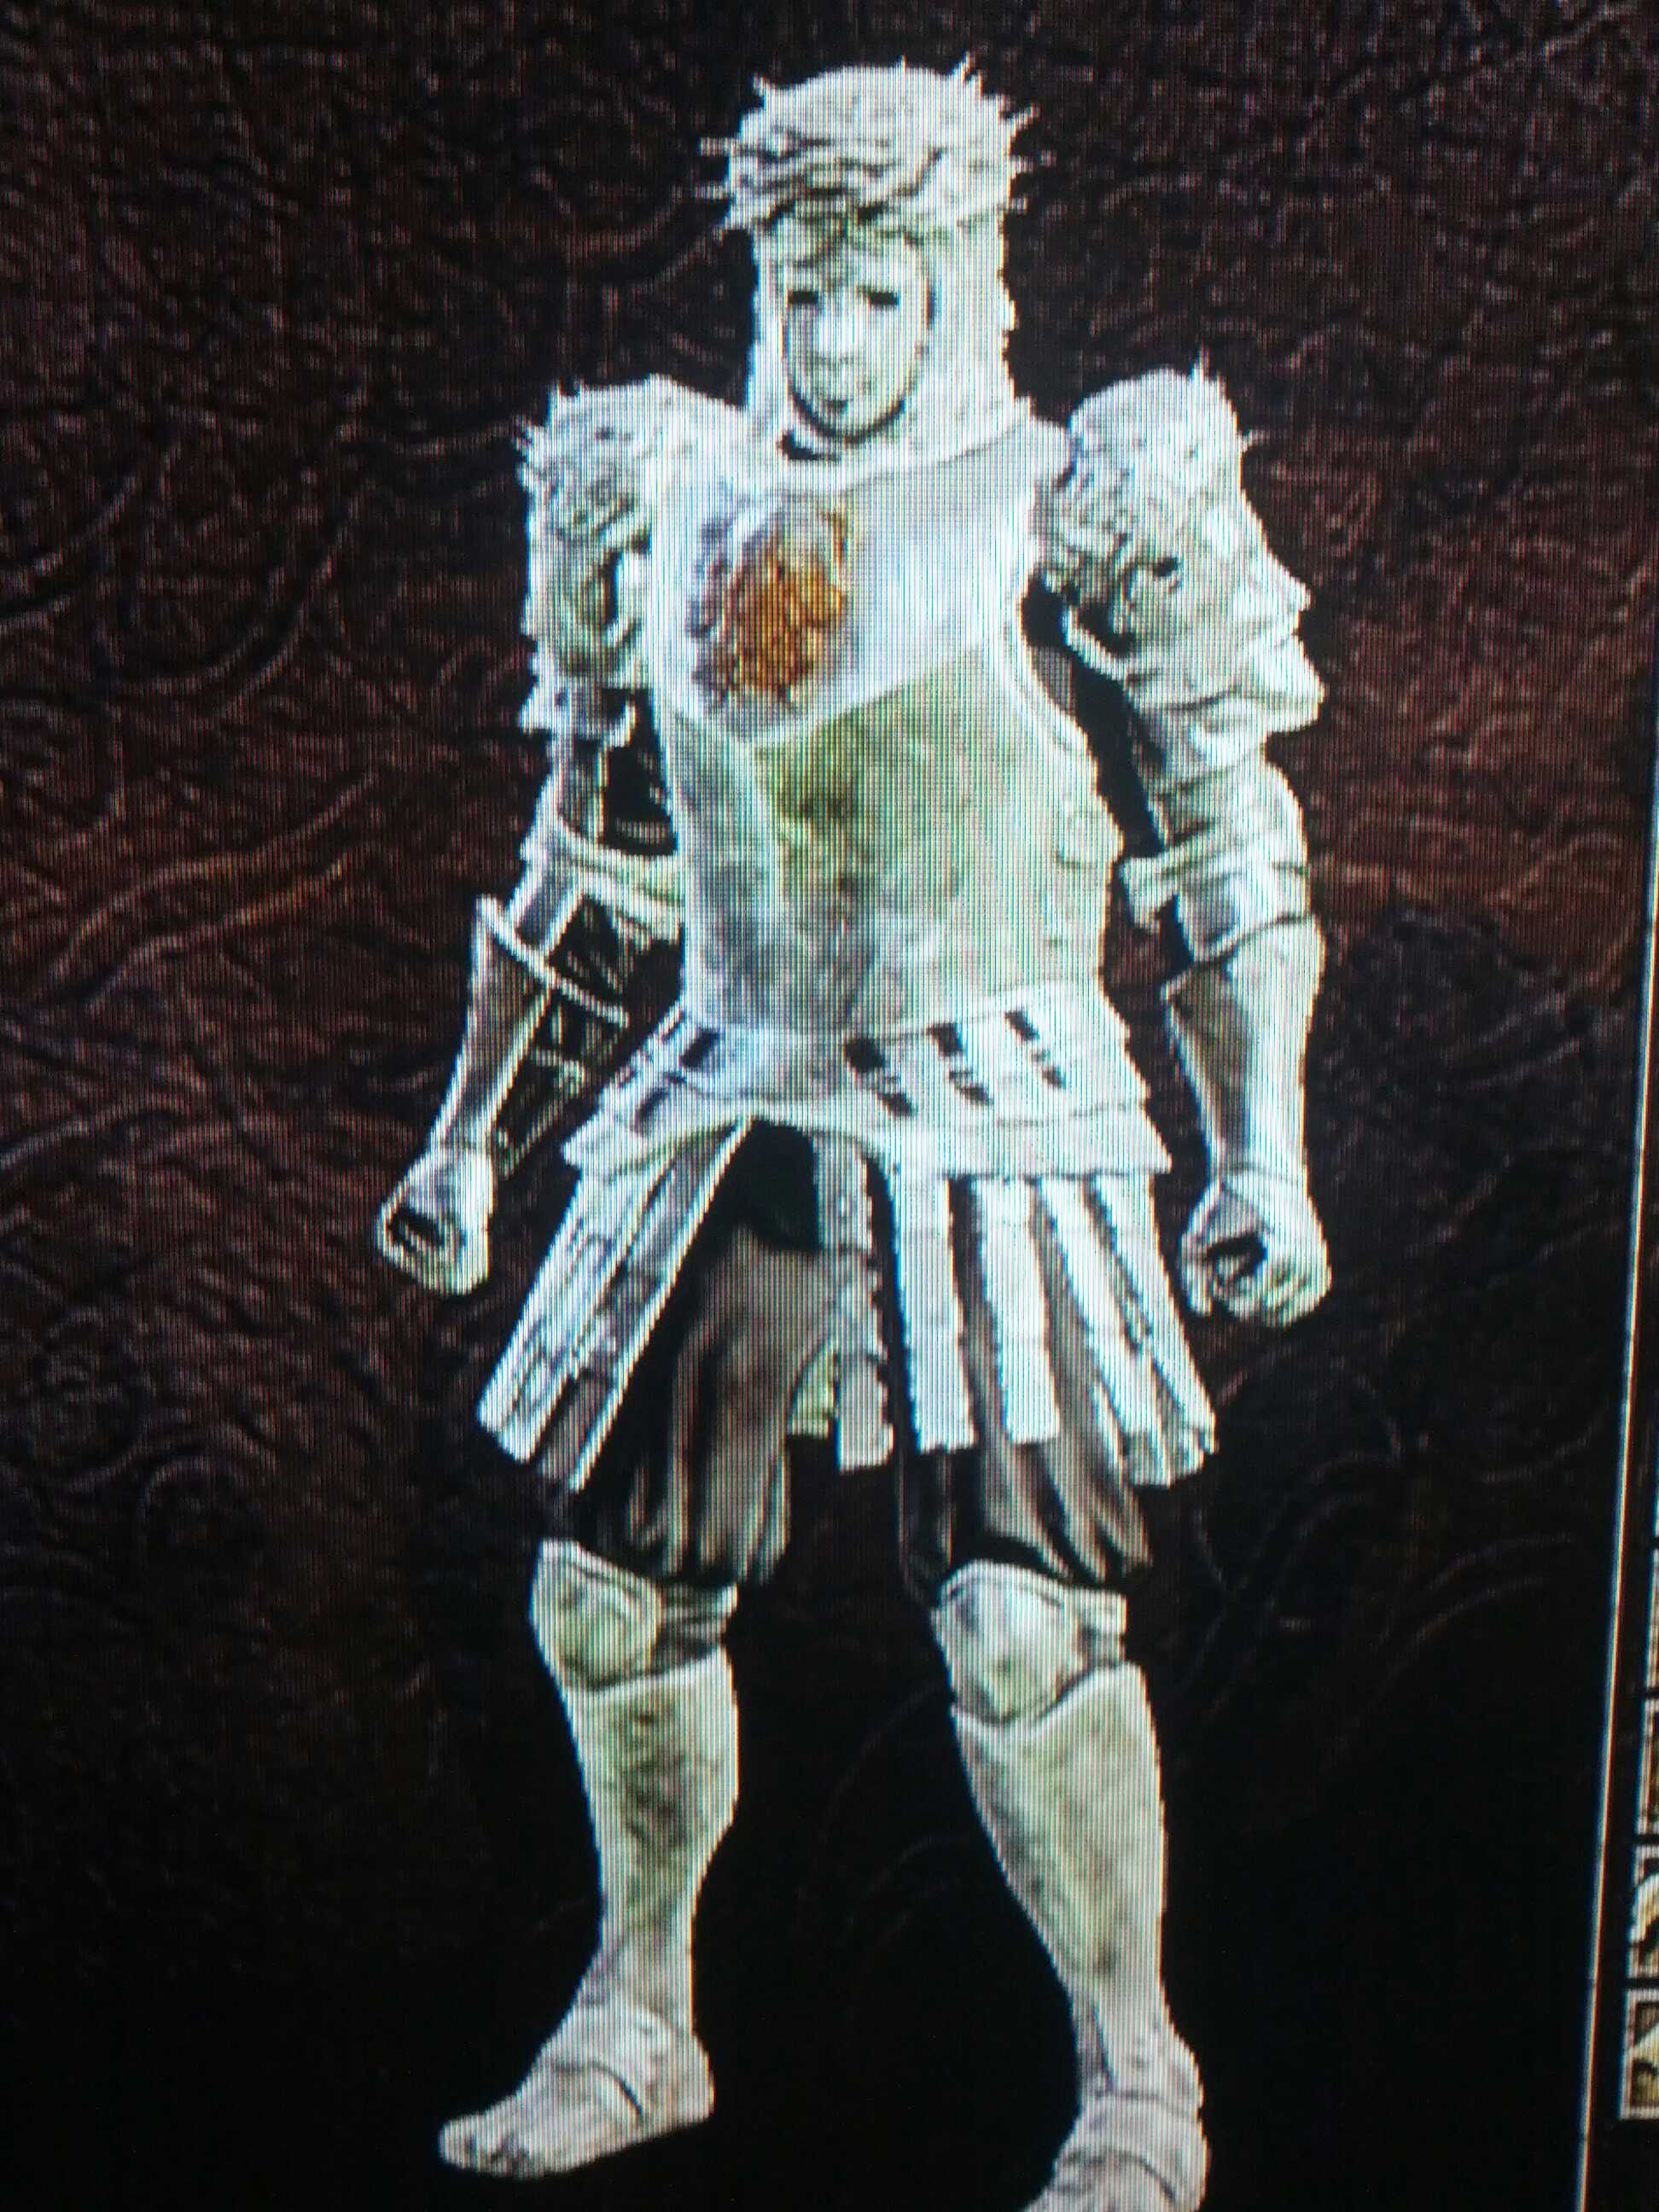 Image - Looking glass knight armor.jpg - Dark Souls Wiki